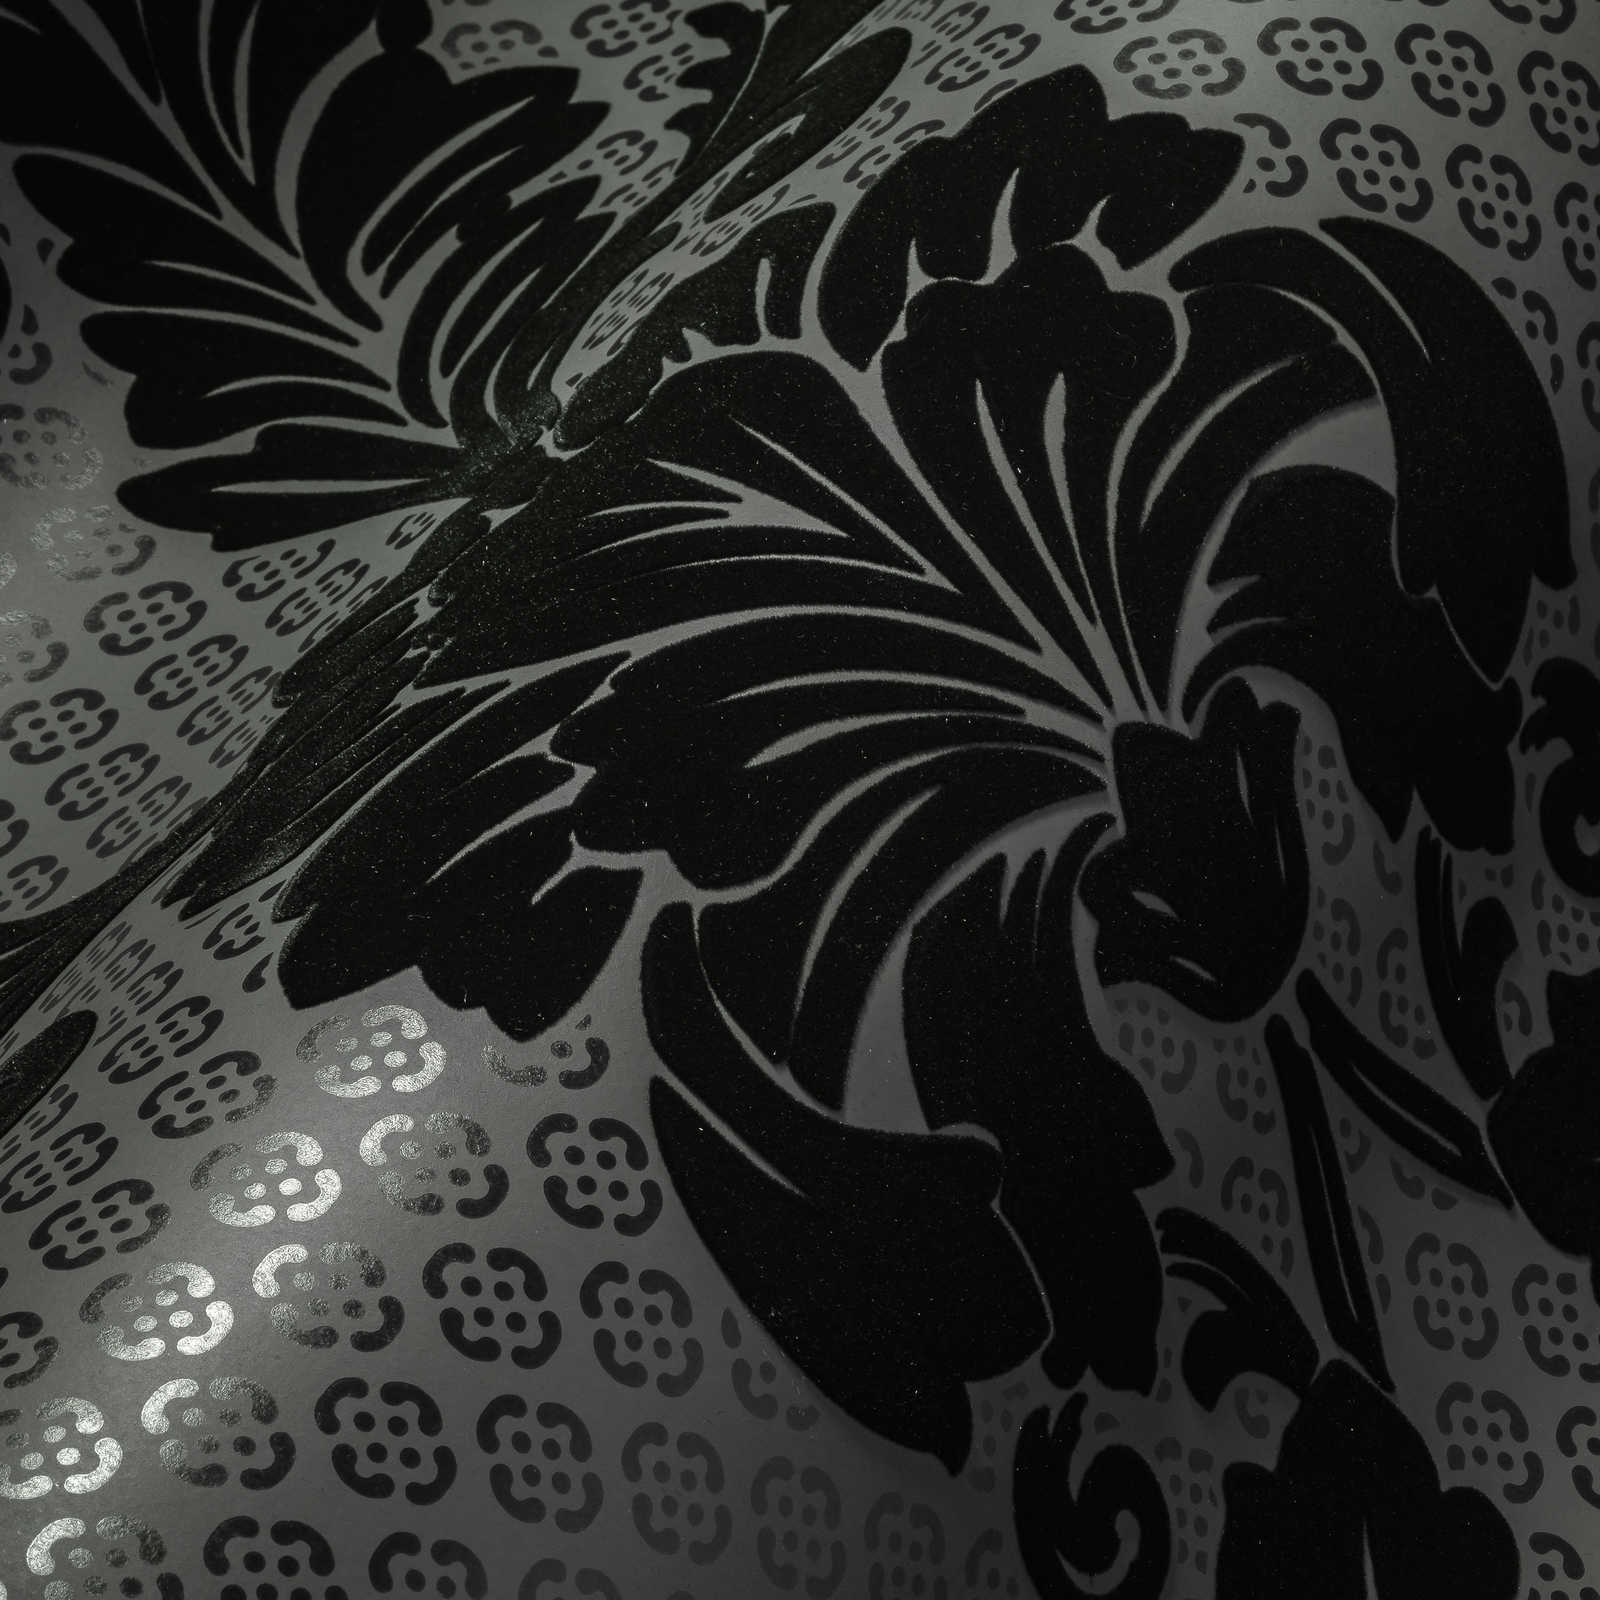             Patterned ornamental wallpaper with large floral motif - black, grey
        